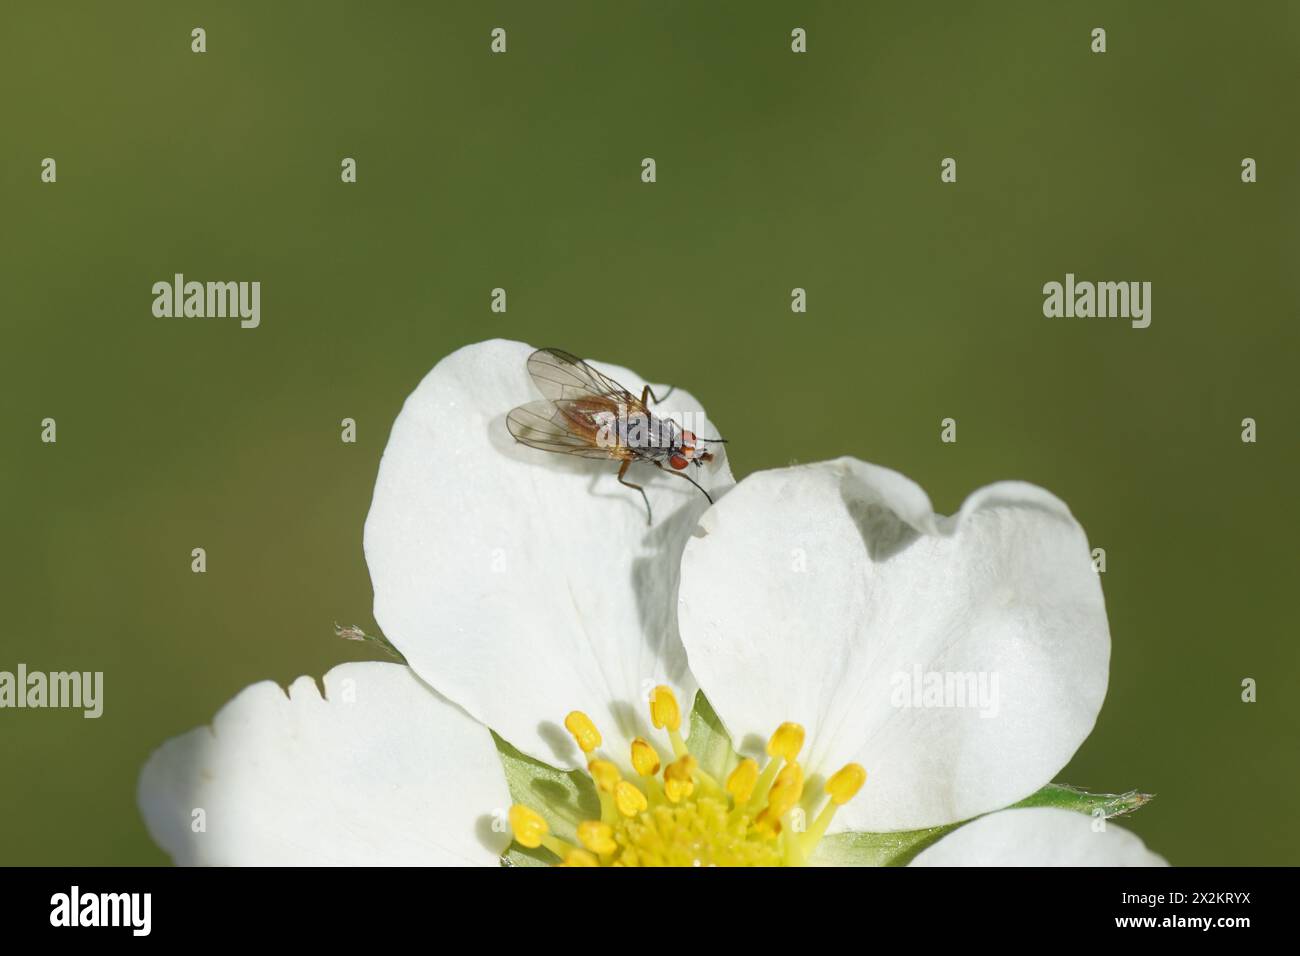 Small fly Pegomya, family Root-Maggot Flies (Anthomyiidaes) on flower of strawberry Fragaria. Tribe Pegomyini. Subfamily Pegomyinae. Spring, April, Stock Photo